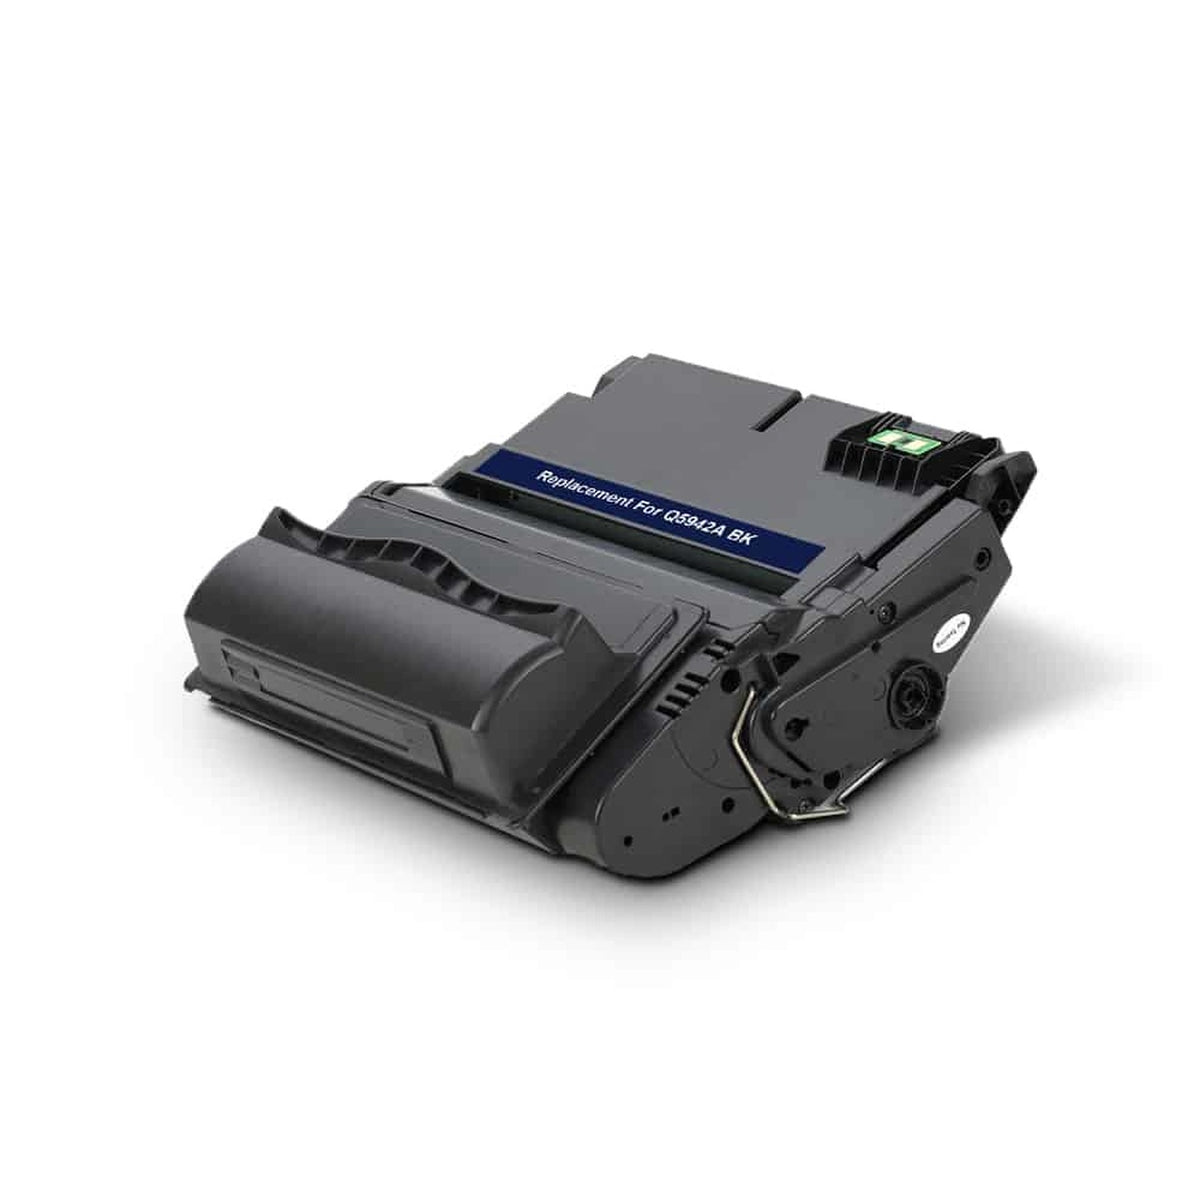 HP LaserJet 4250 Q5942A MICR Black Toner Cartridge Estimated Yield 10,000 Pages